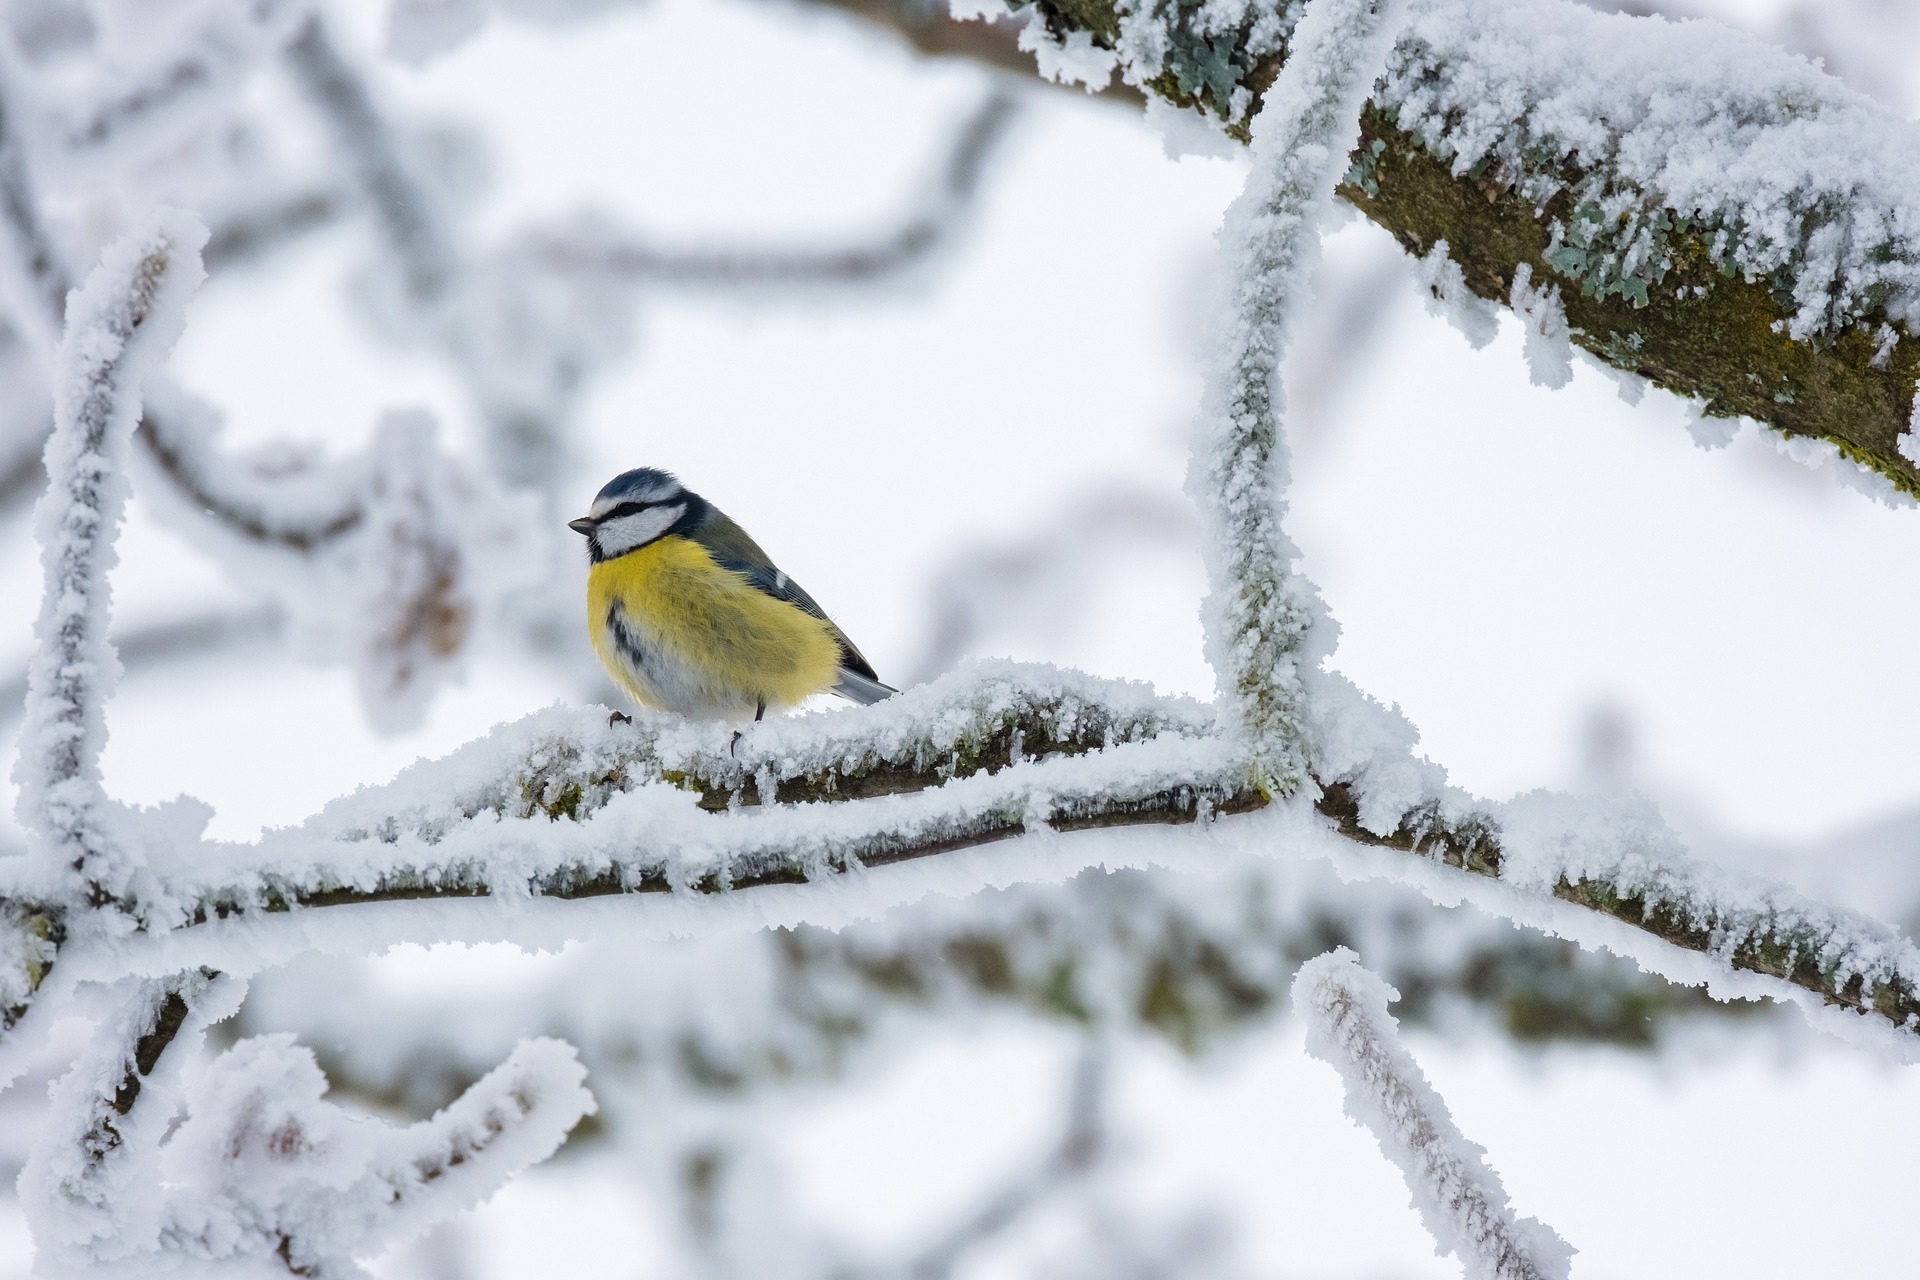 A Blue Tit bird rests on a snow-laden tree branch.